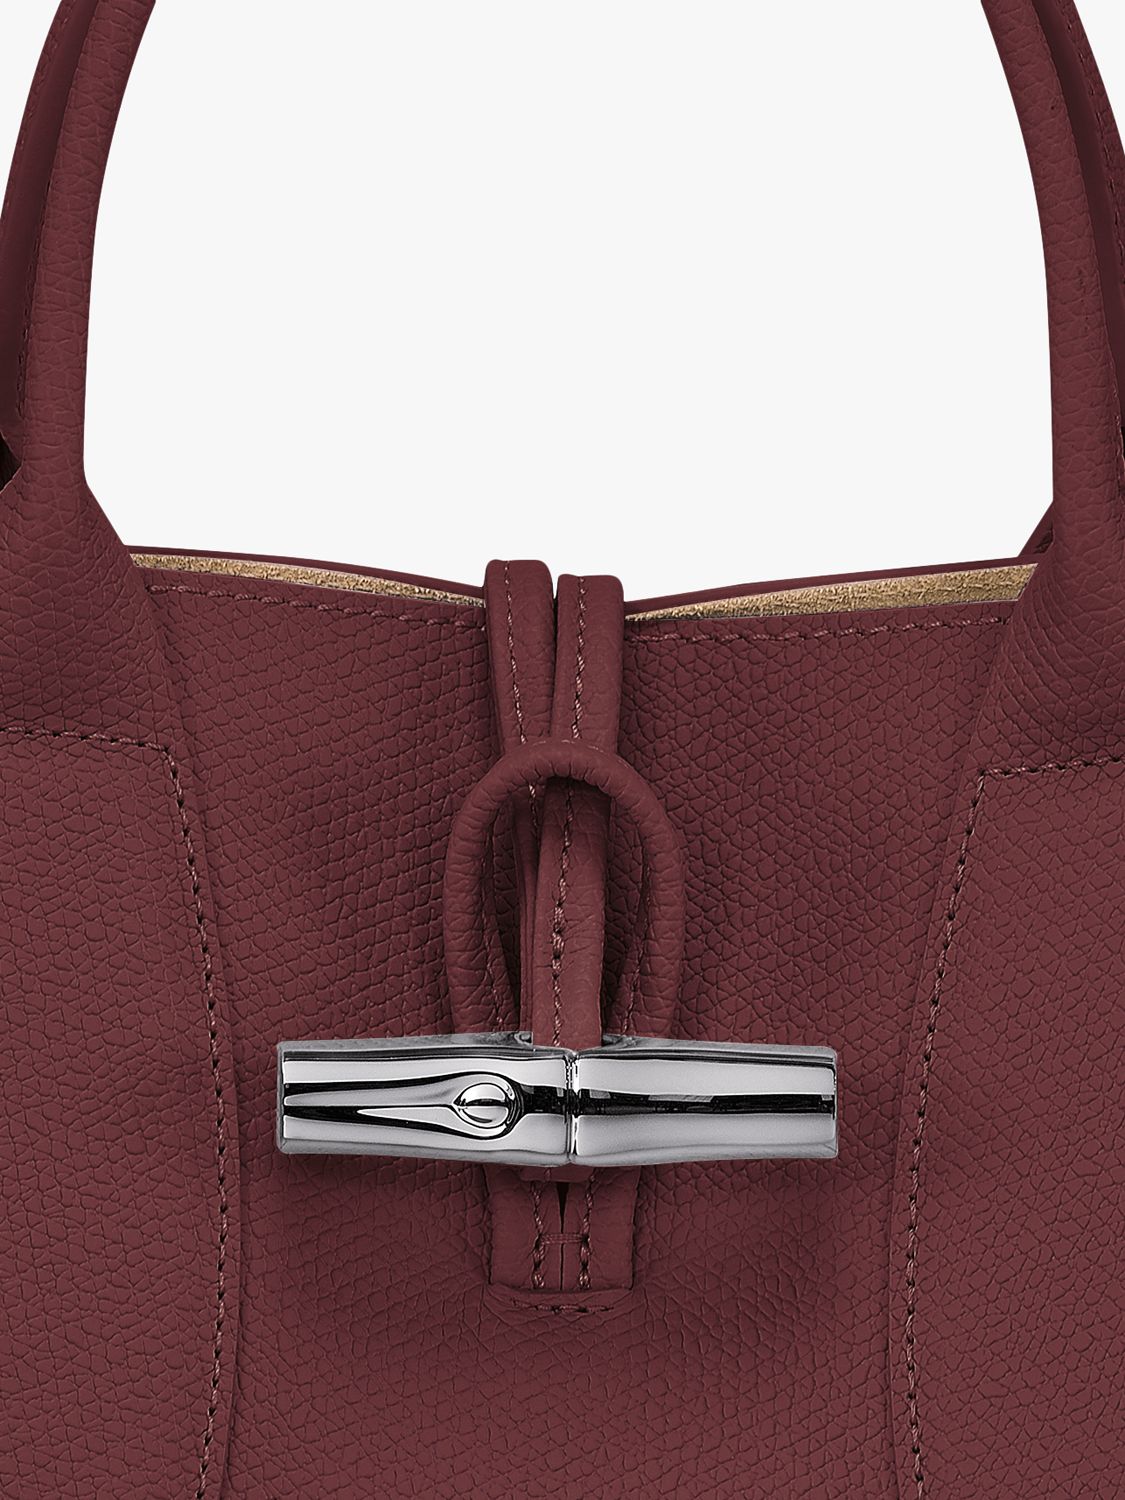 Longchamp Roseau Leather Shoulder Bag, Natural at John Lewis